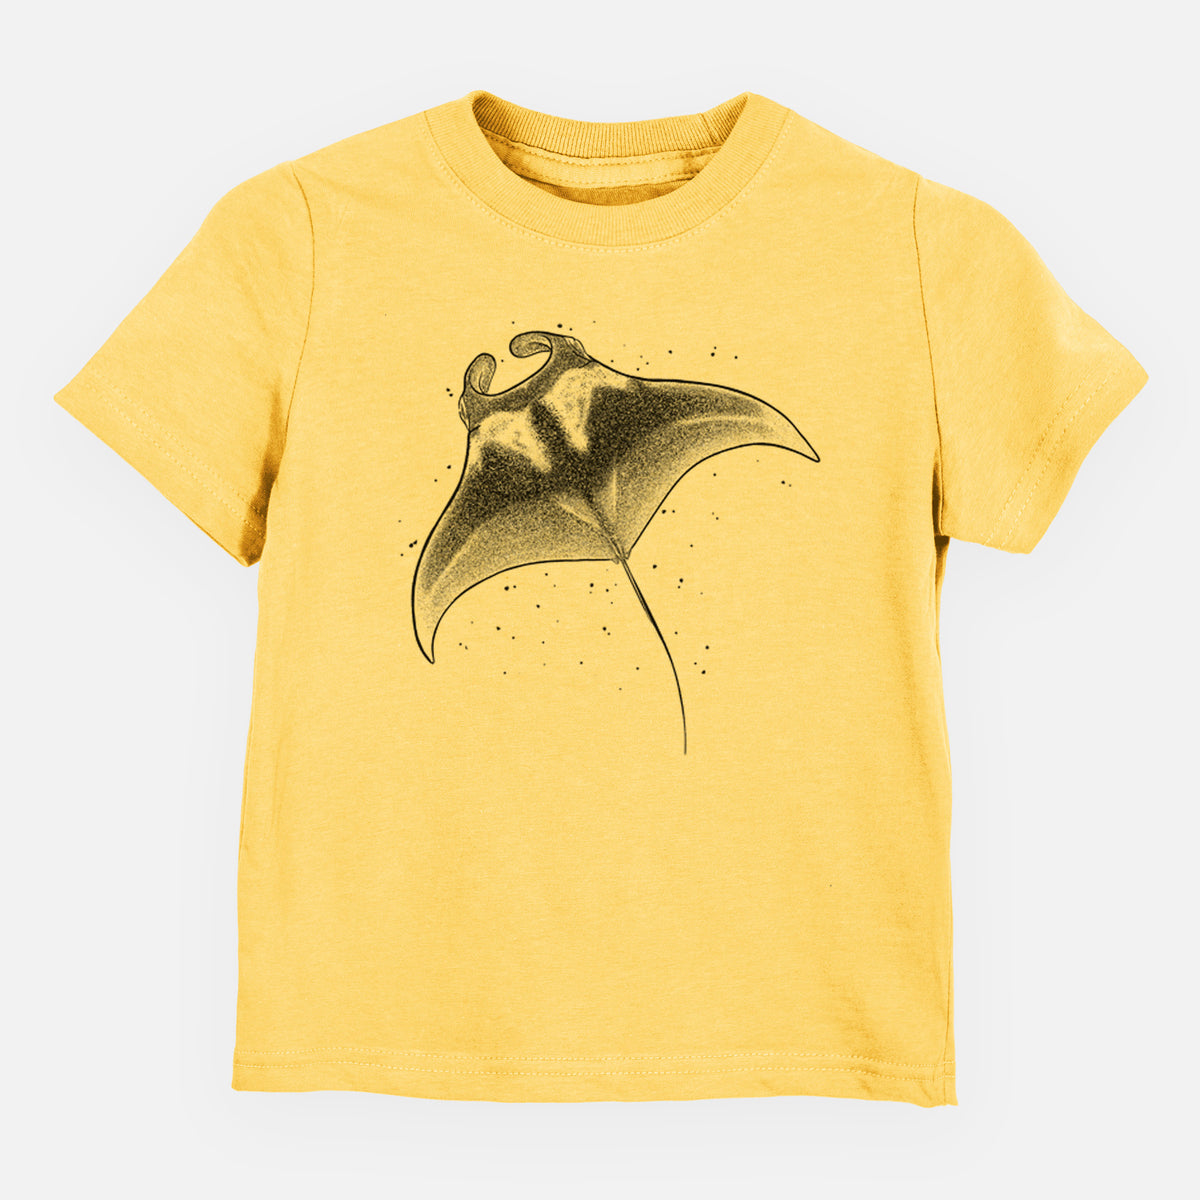 Reef Manta Ray - Ꮇonula alfredi - Kids Shirt